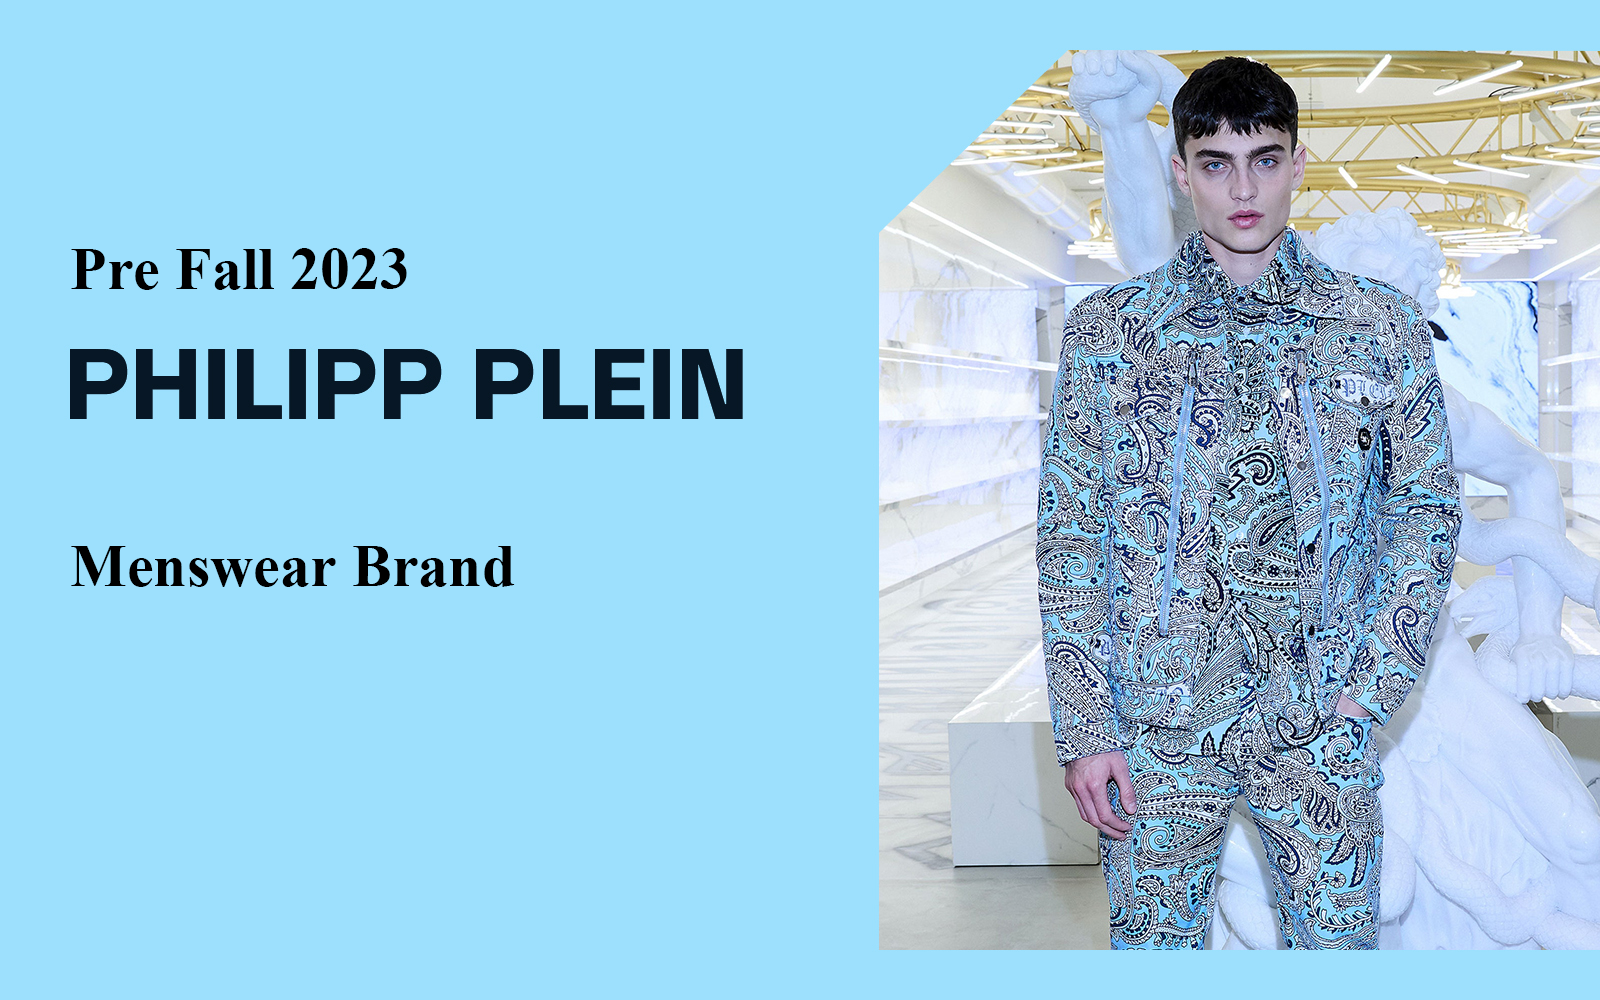 The Analysis of Philipp Plein The Menswear Brand